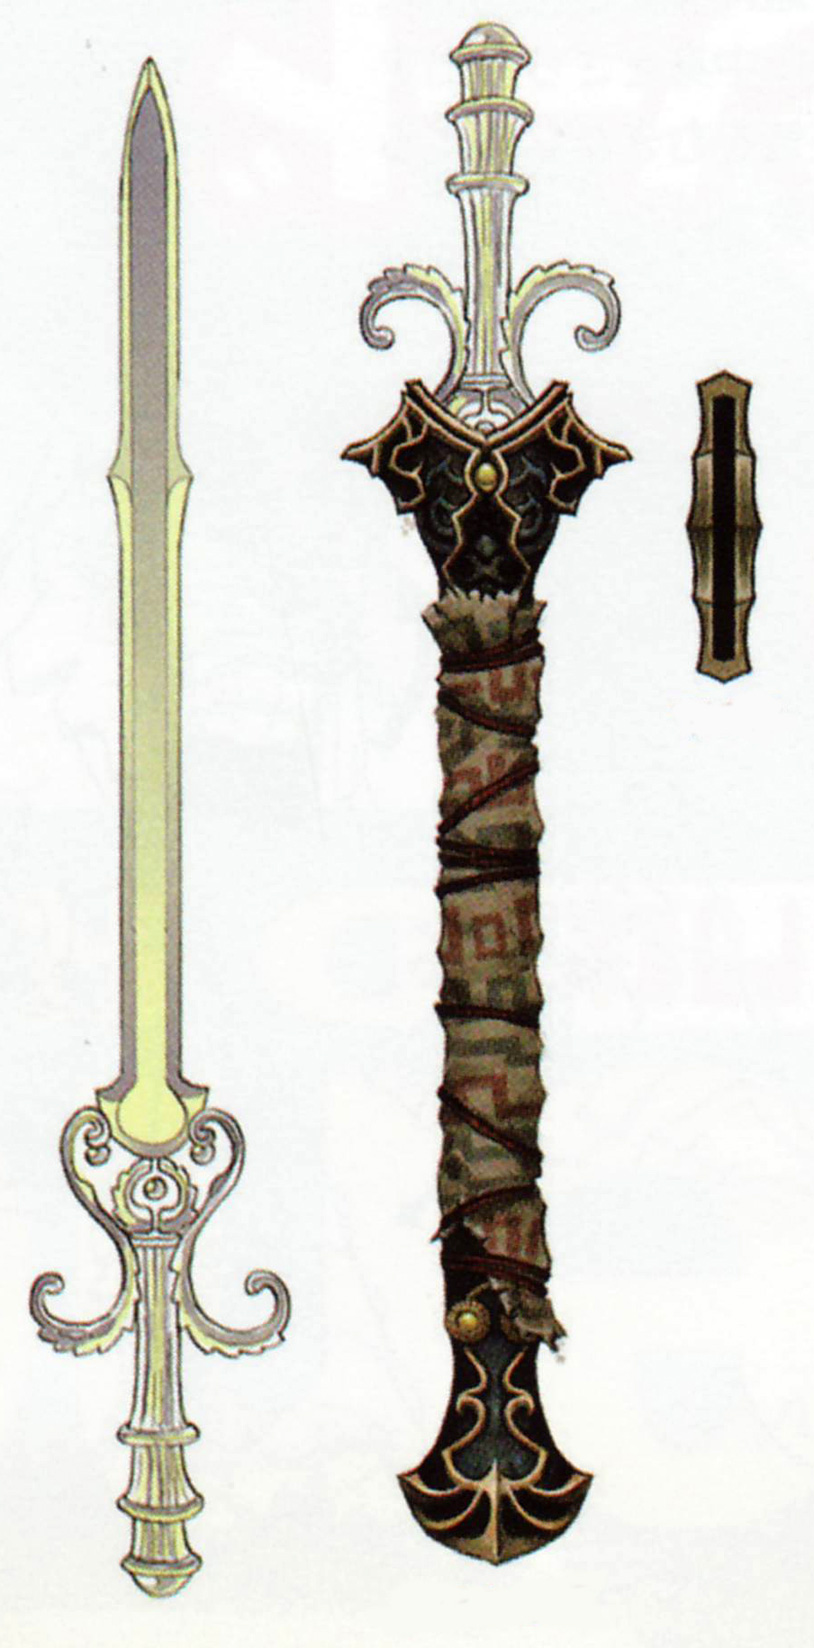 TP Ganondorf's Sword